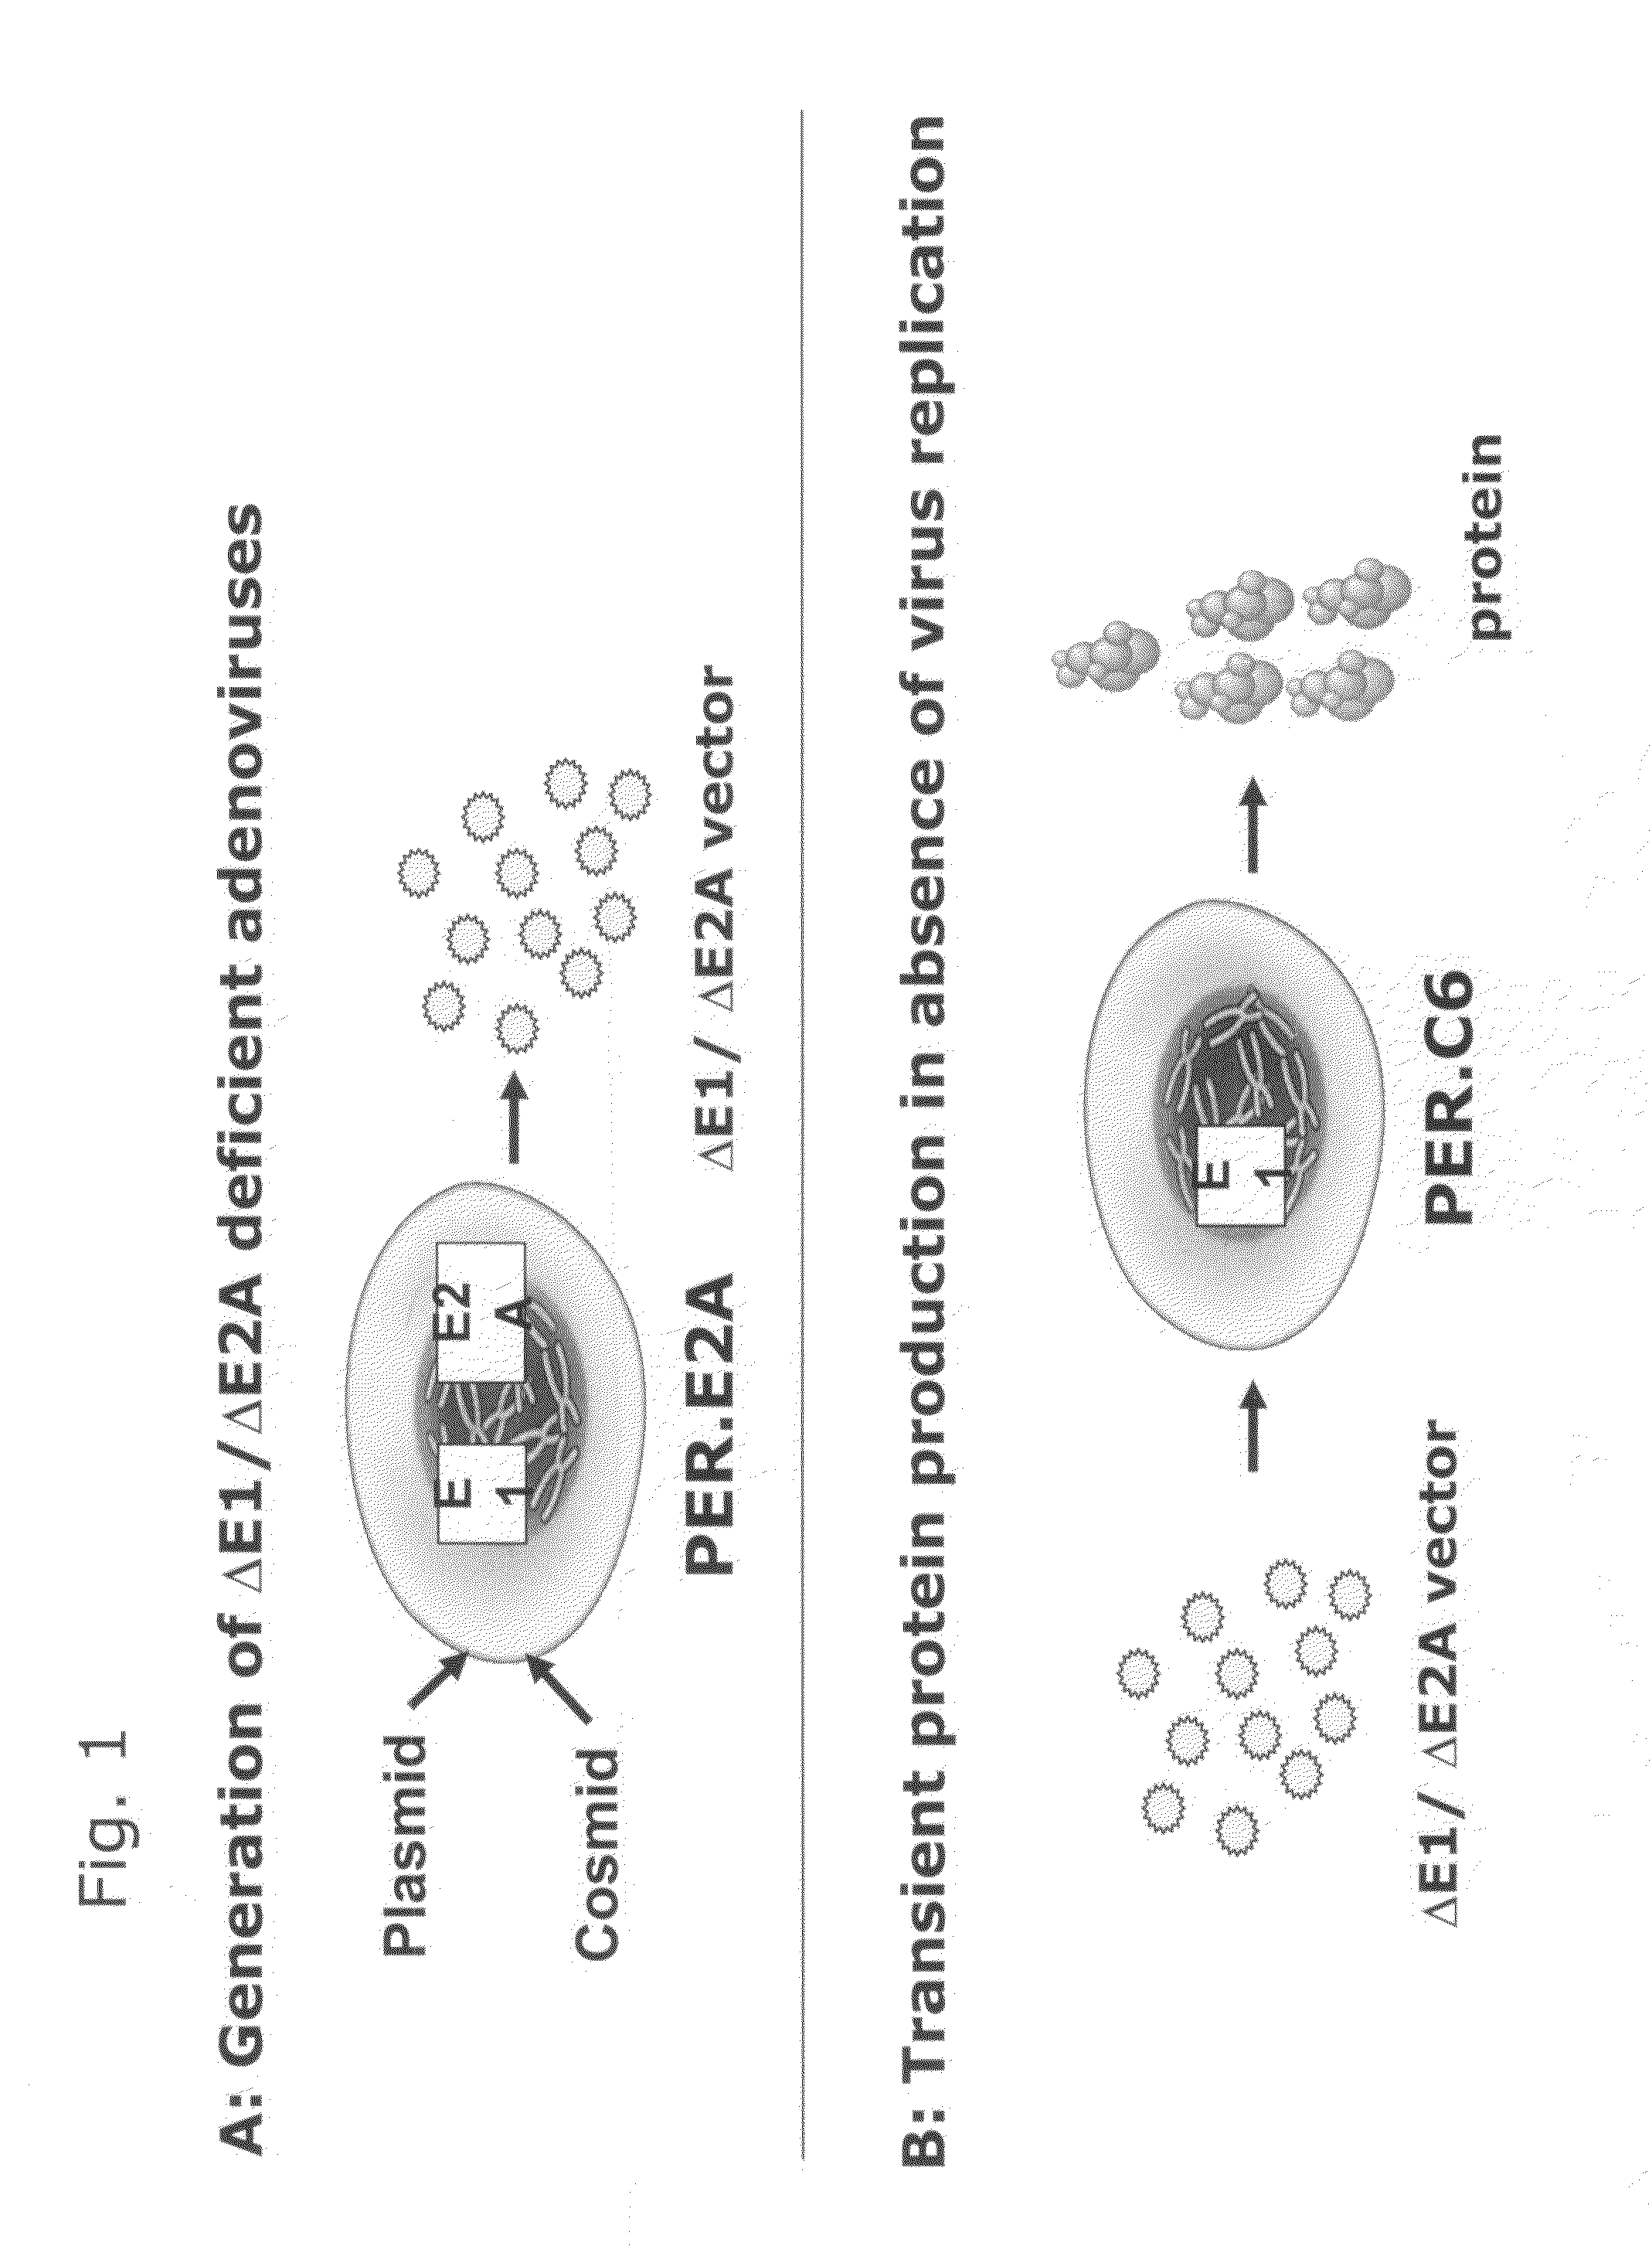 Transient protein expression methods